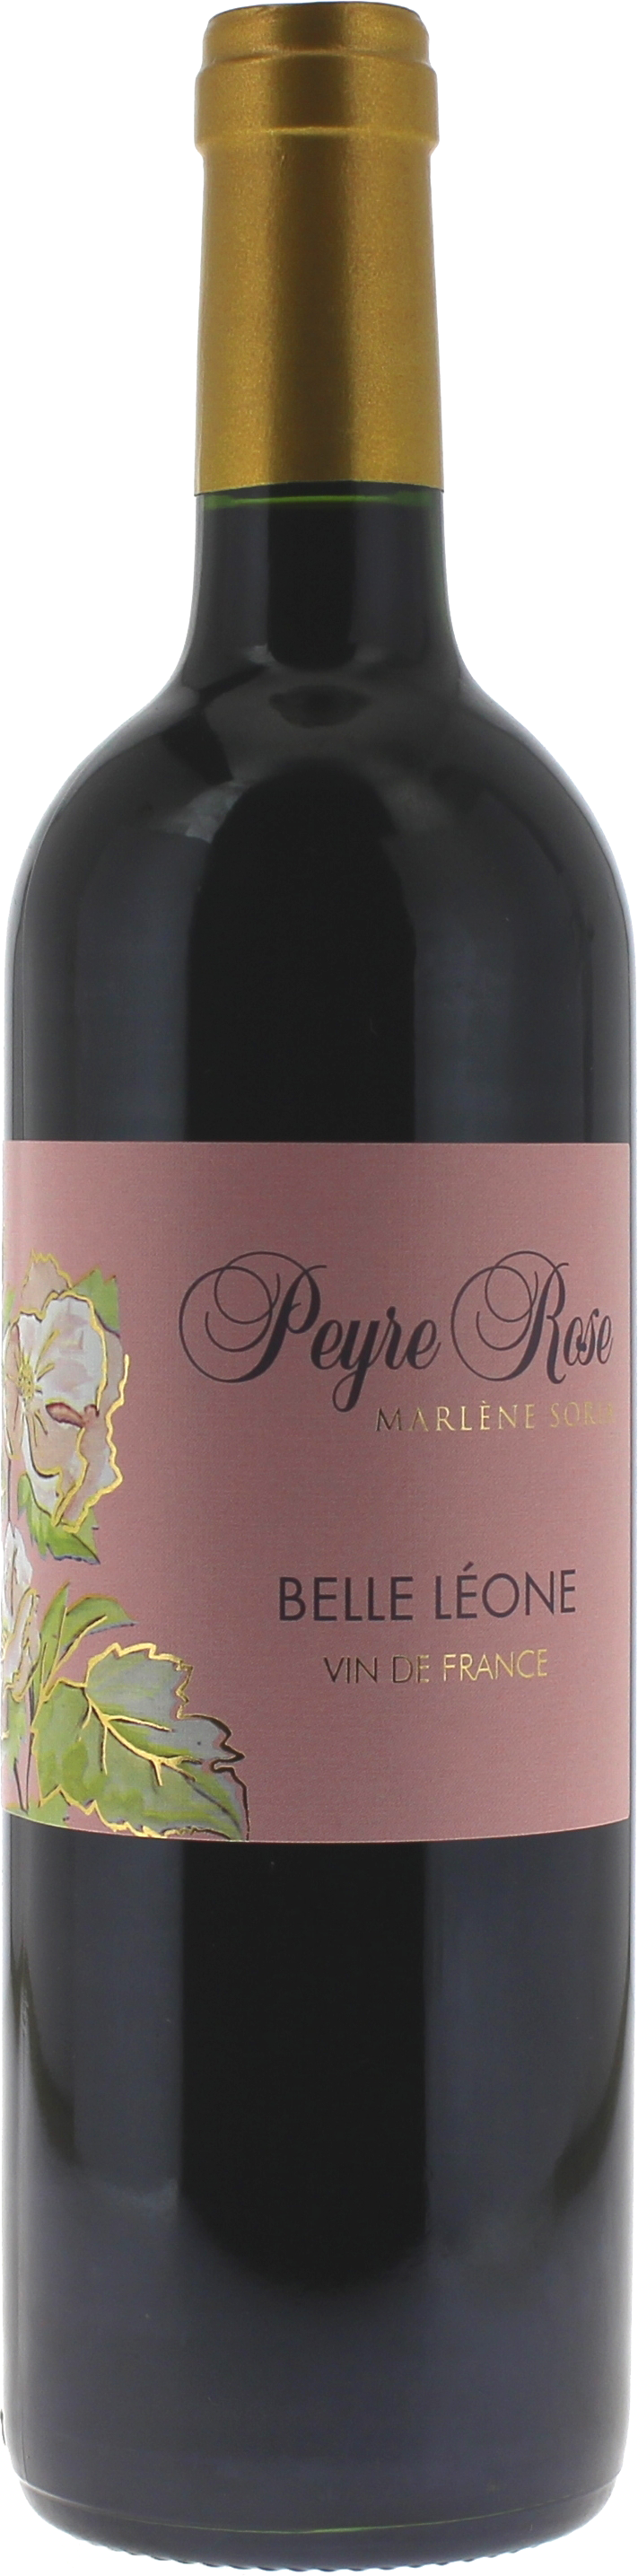 Peyre rose belle leone 2014  Vins de France, Languedoc